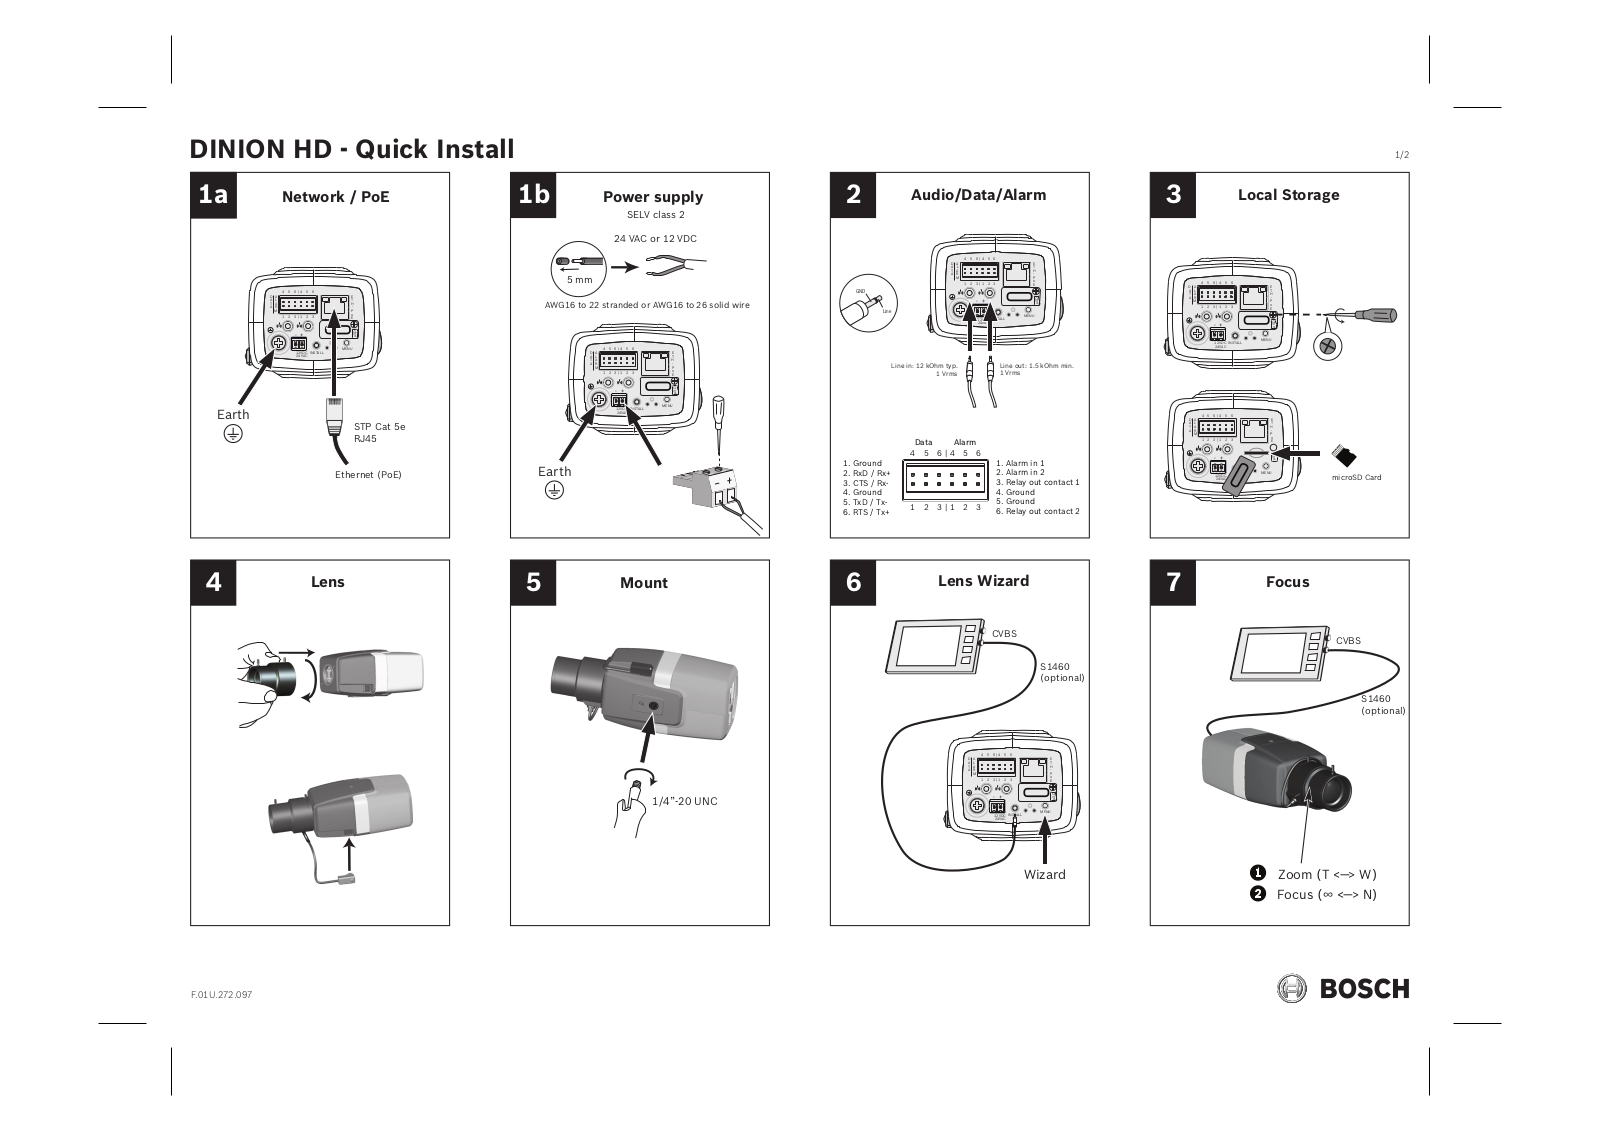 Bosch DINION User Manual